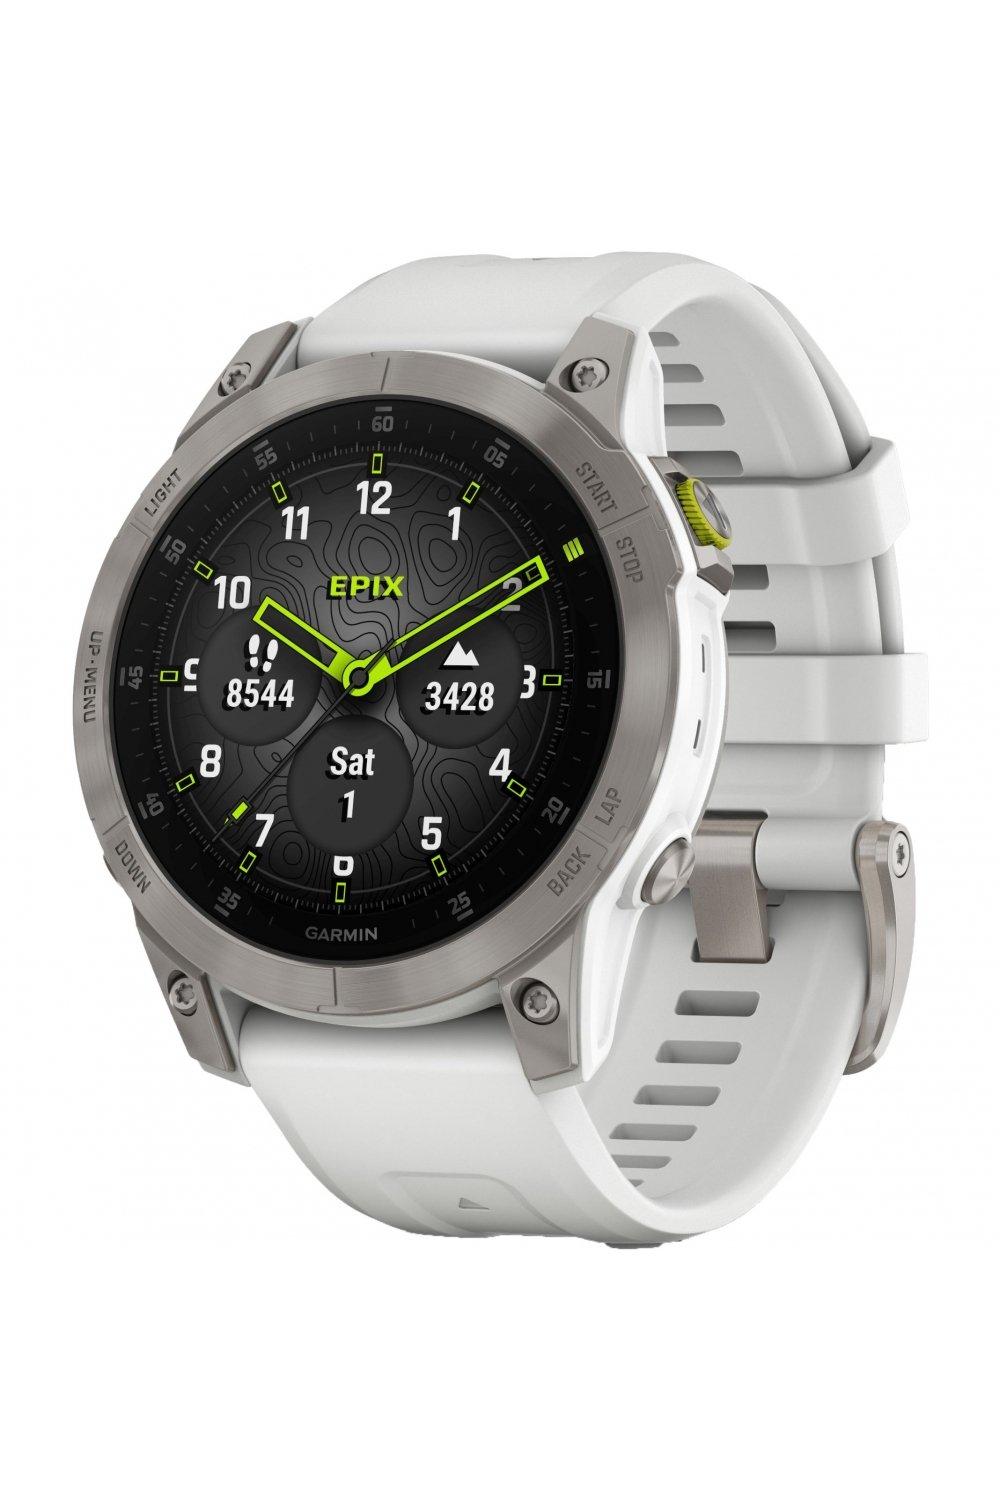 Epix 2 Plastic/resin Complication Hybrid Watch - 010-02582-21